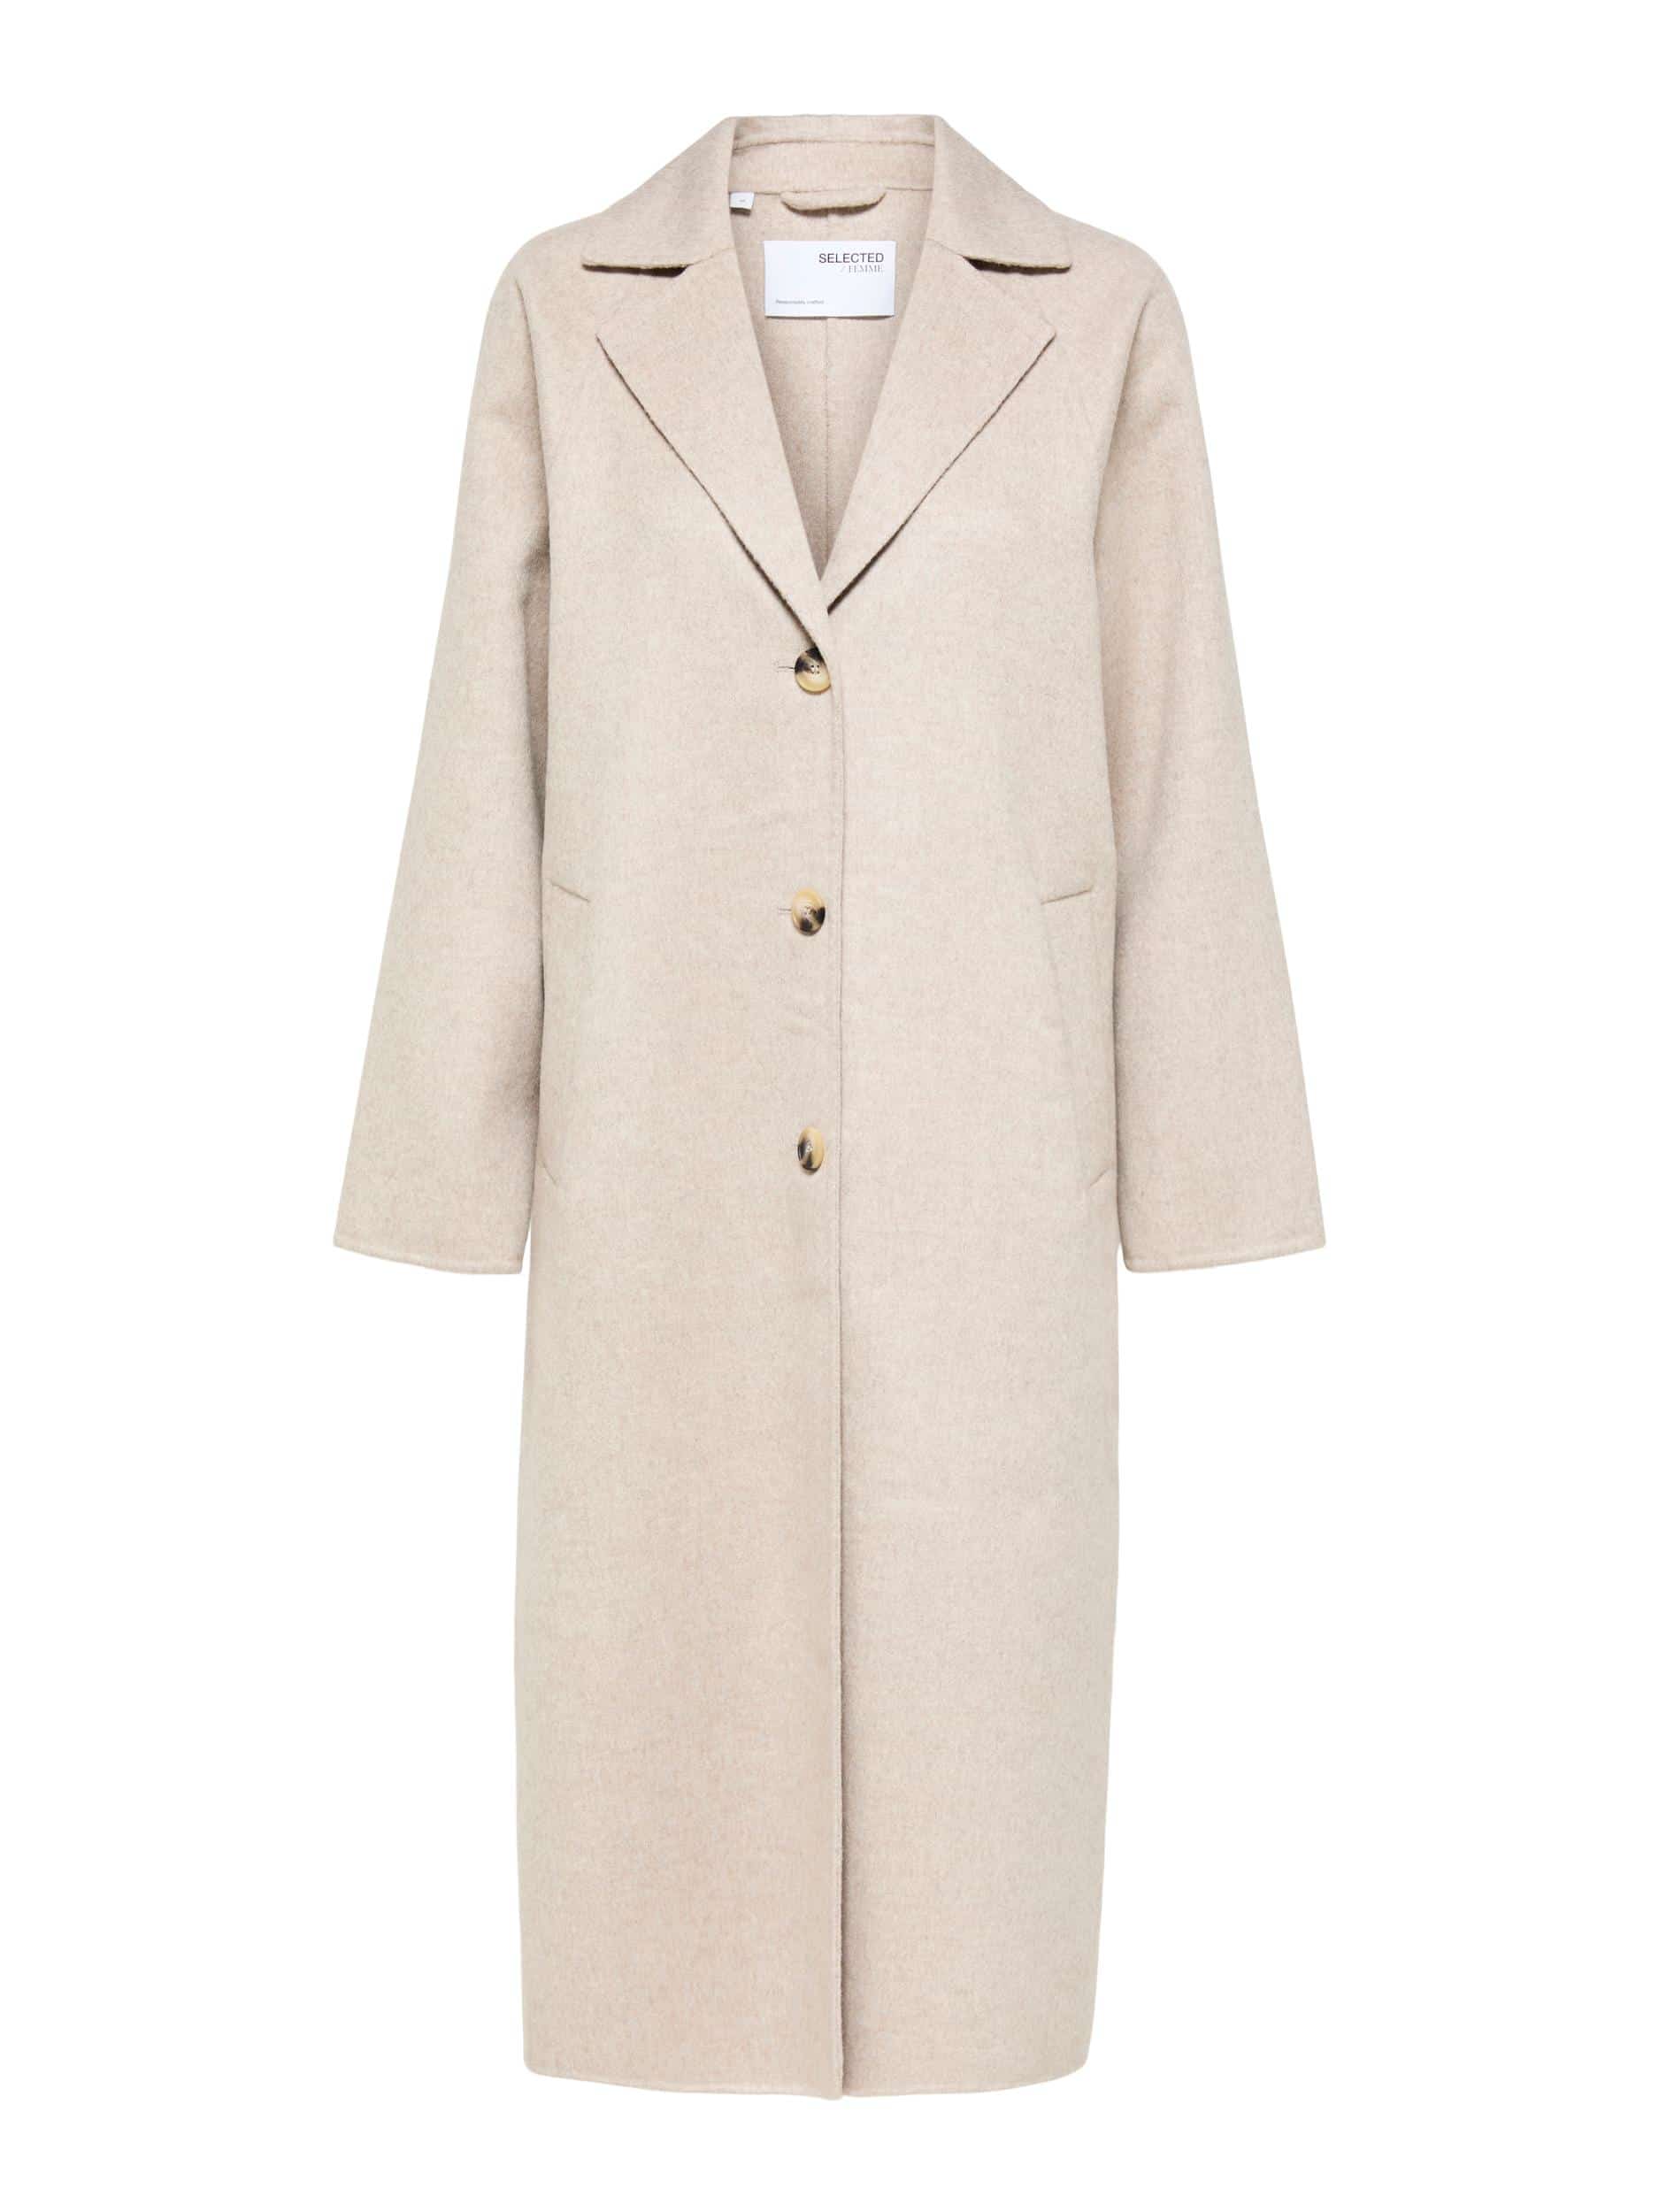 Selected Femme "New" Wool Coat beige